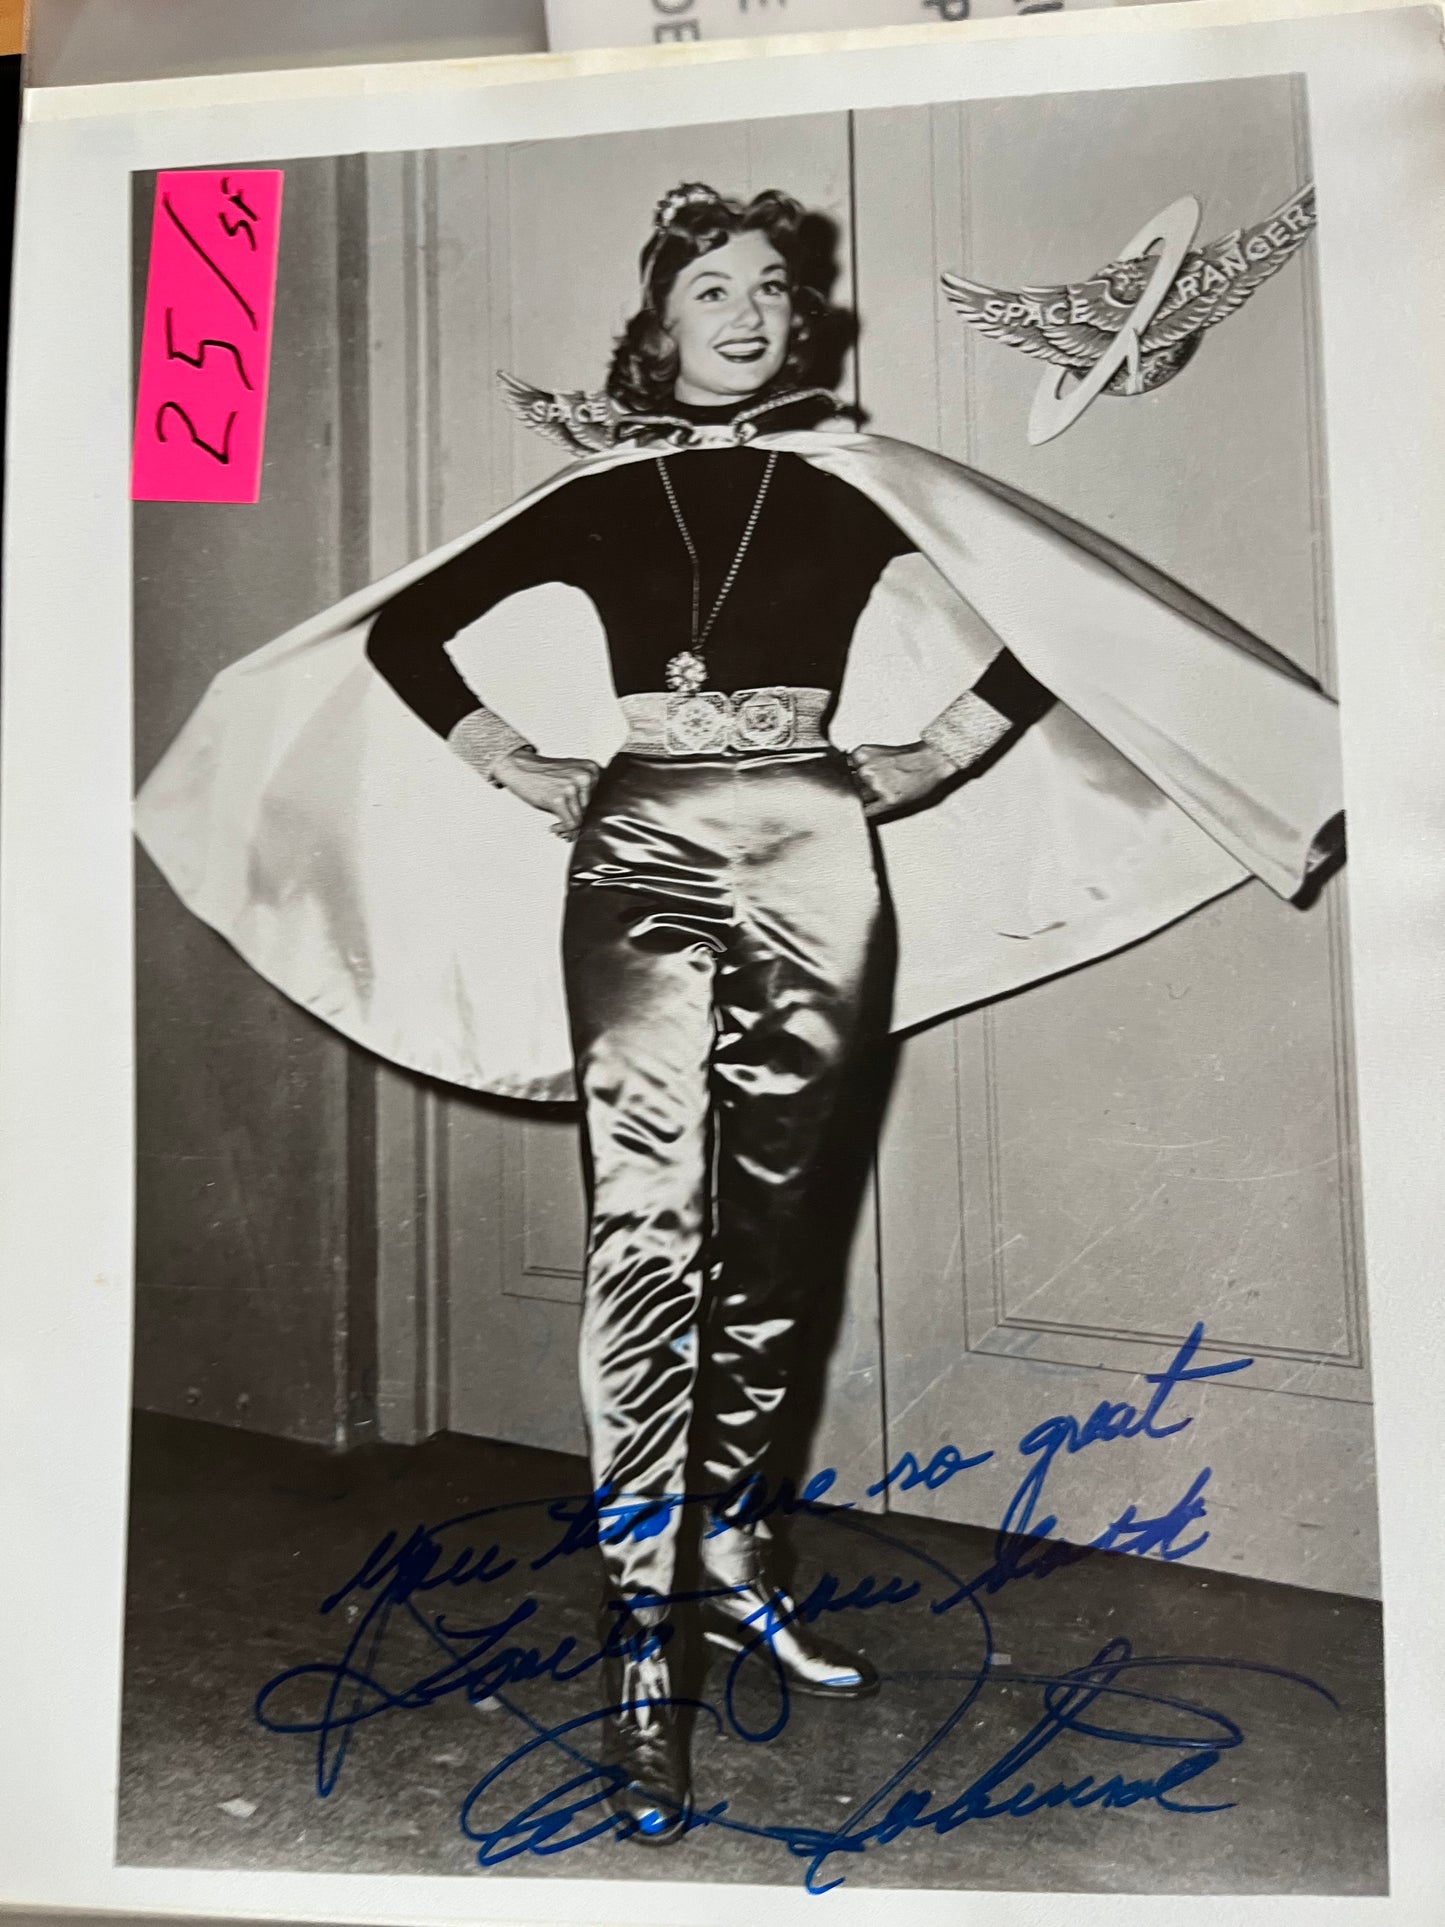 ANN ROBINSON, Rocky Jones, Space Ranger, autograph